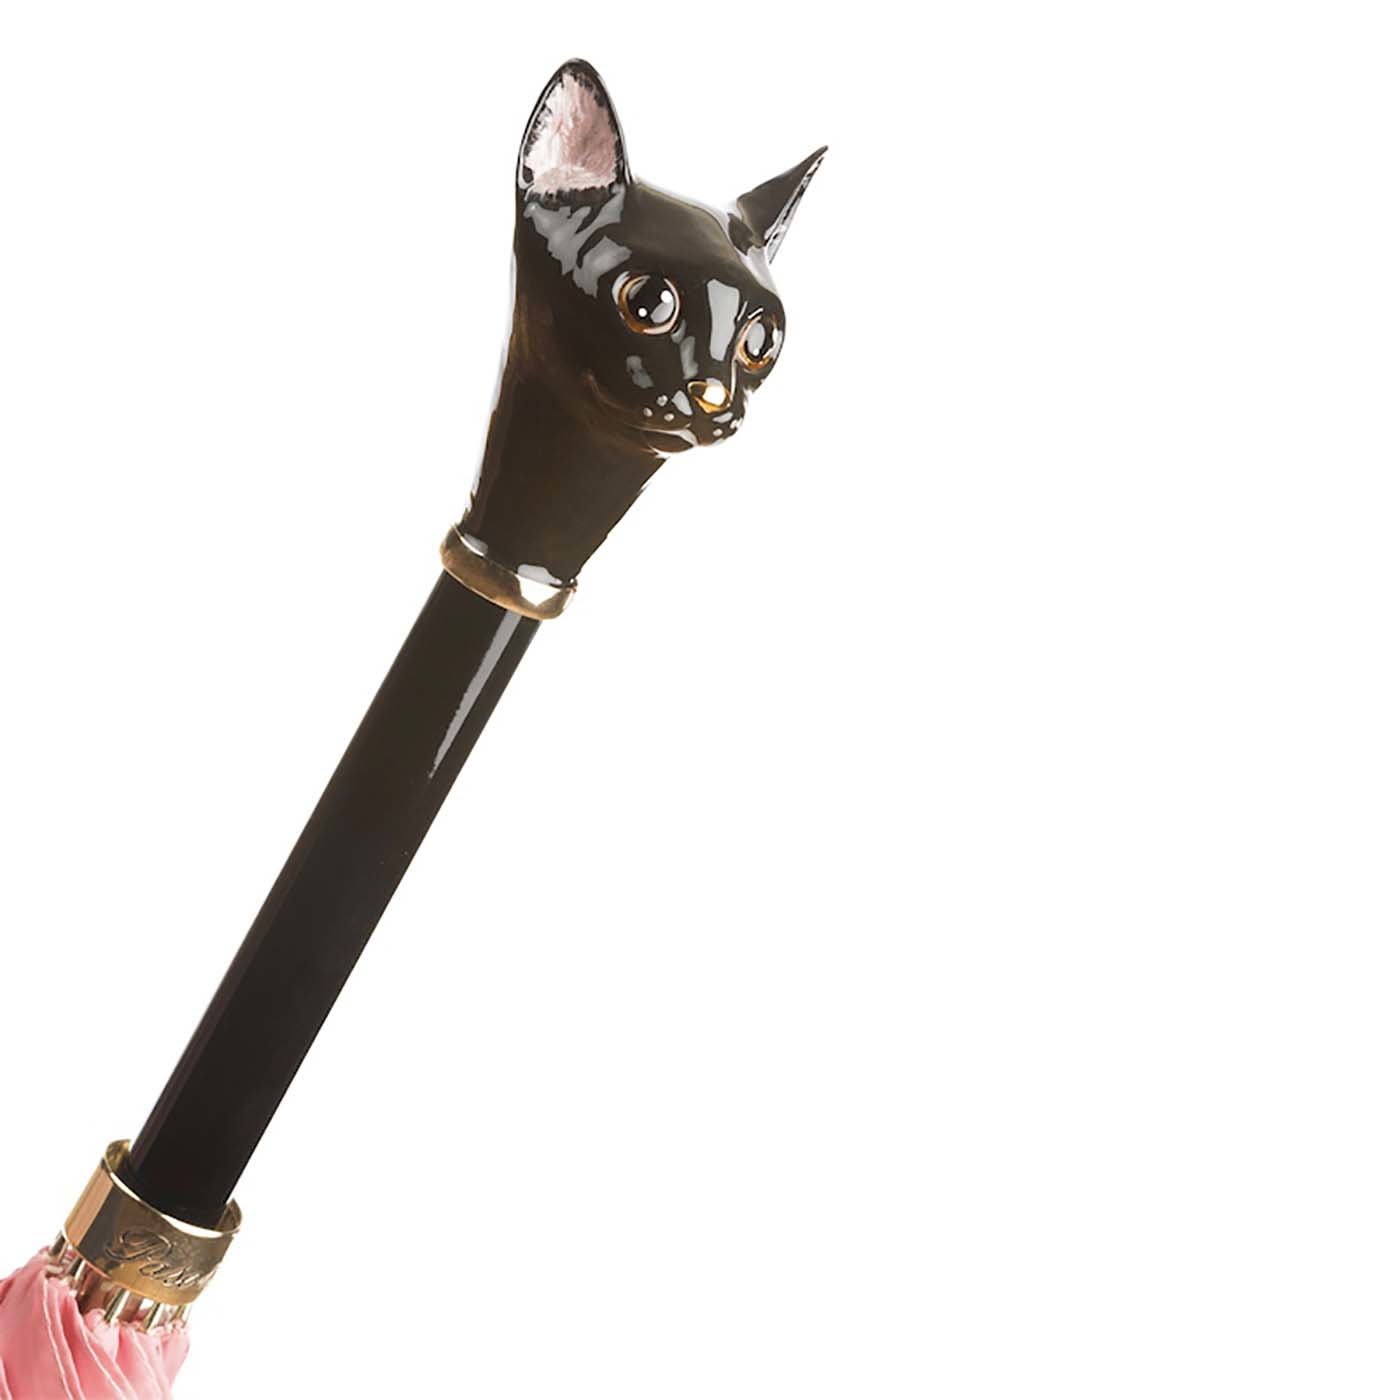 Pink Umbrella With Cat Handle - Pasotti